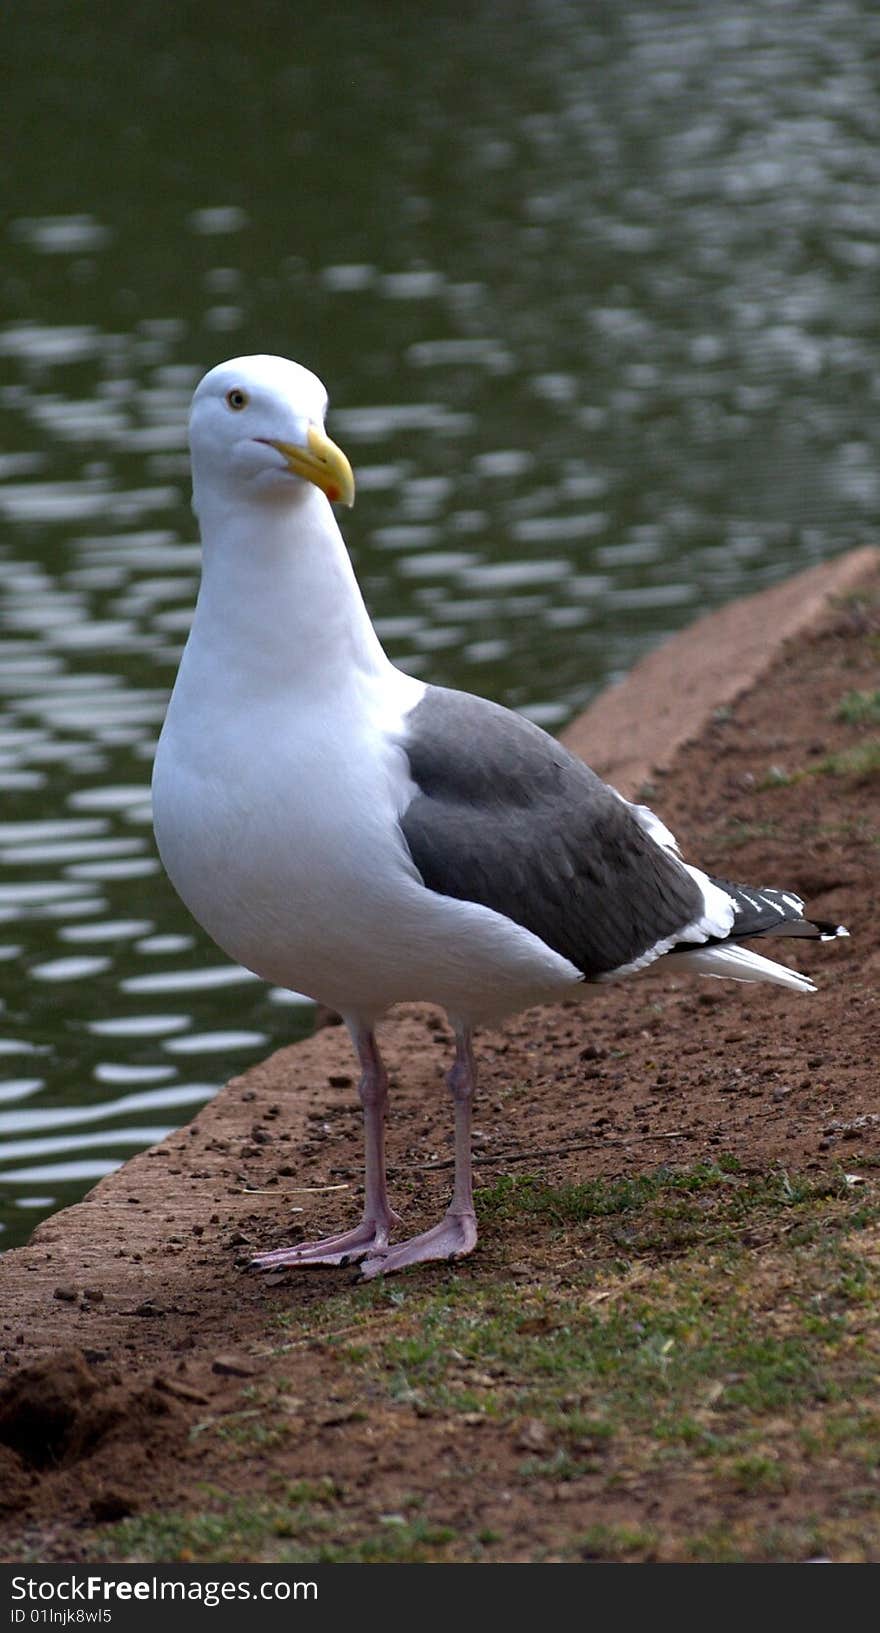 A single sea gull standing